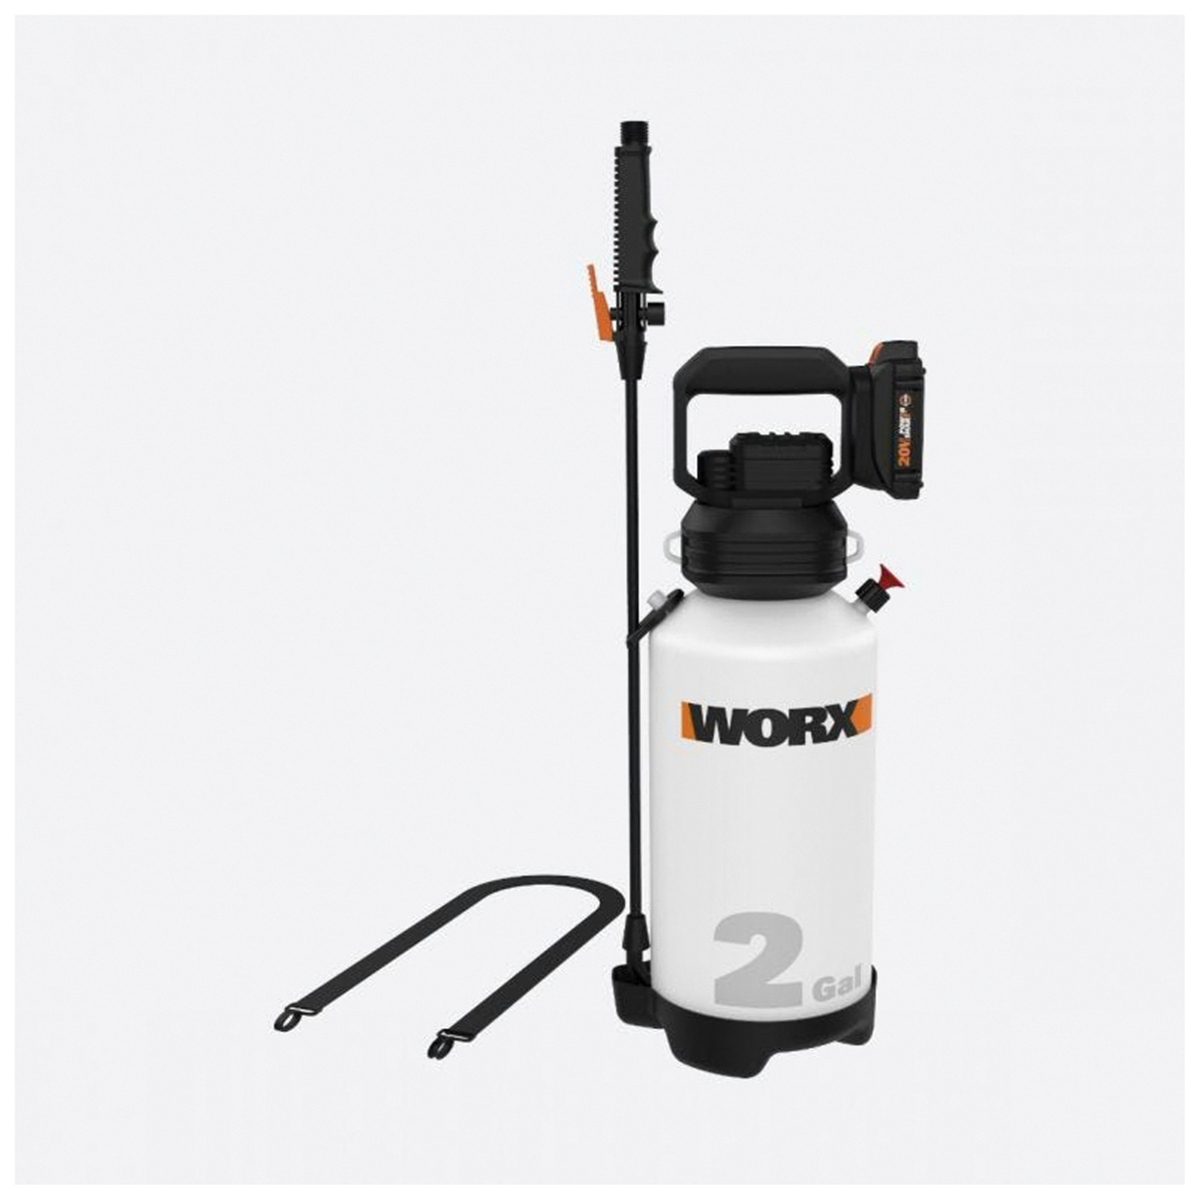 WG829 Cordless Lawn Sprayer, 20 V Battery, 2 Ah, 2 gal Capacity